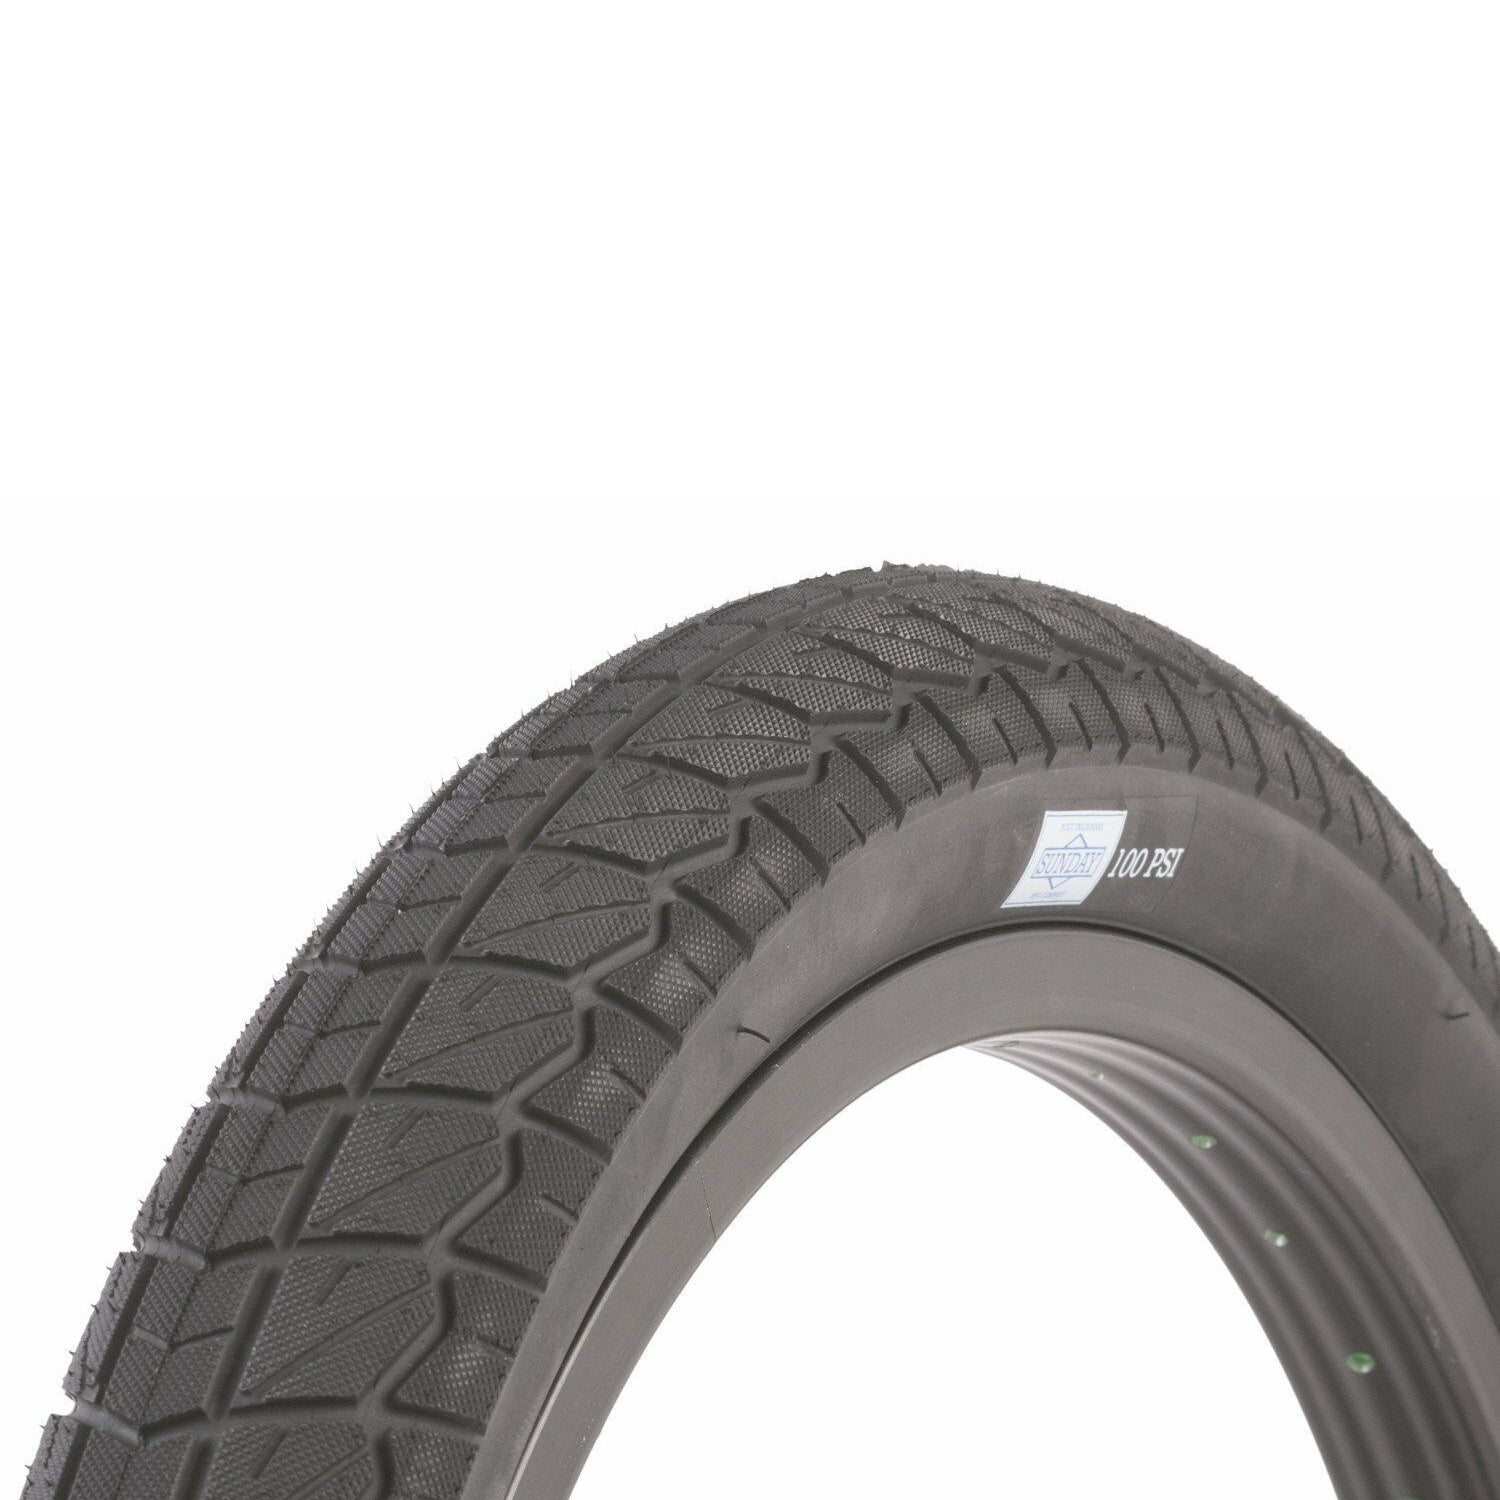 20x2.25 Sunday BMX Current Tire - 100 psi - All Black